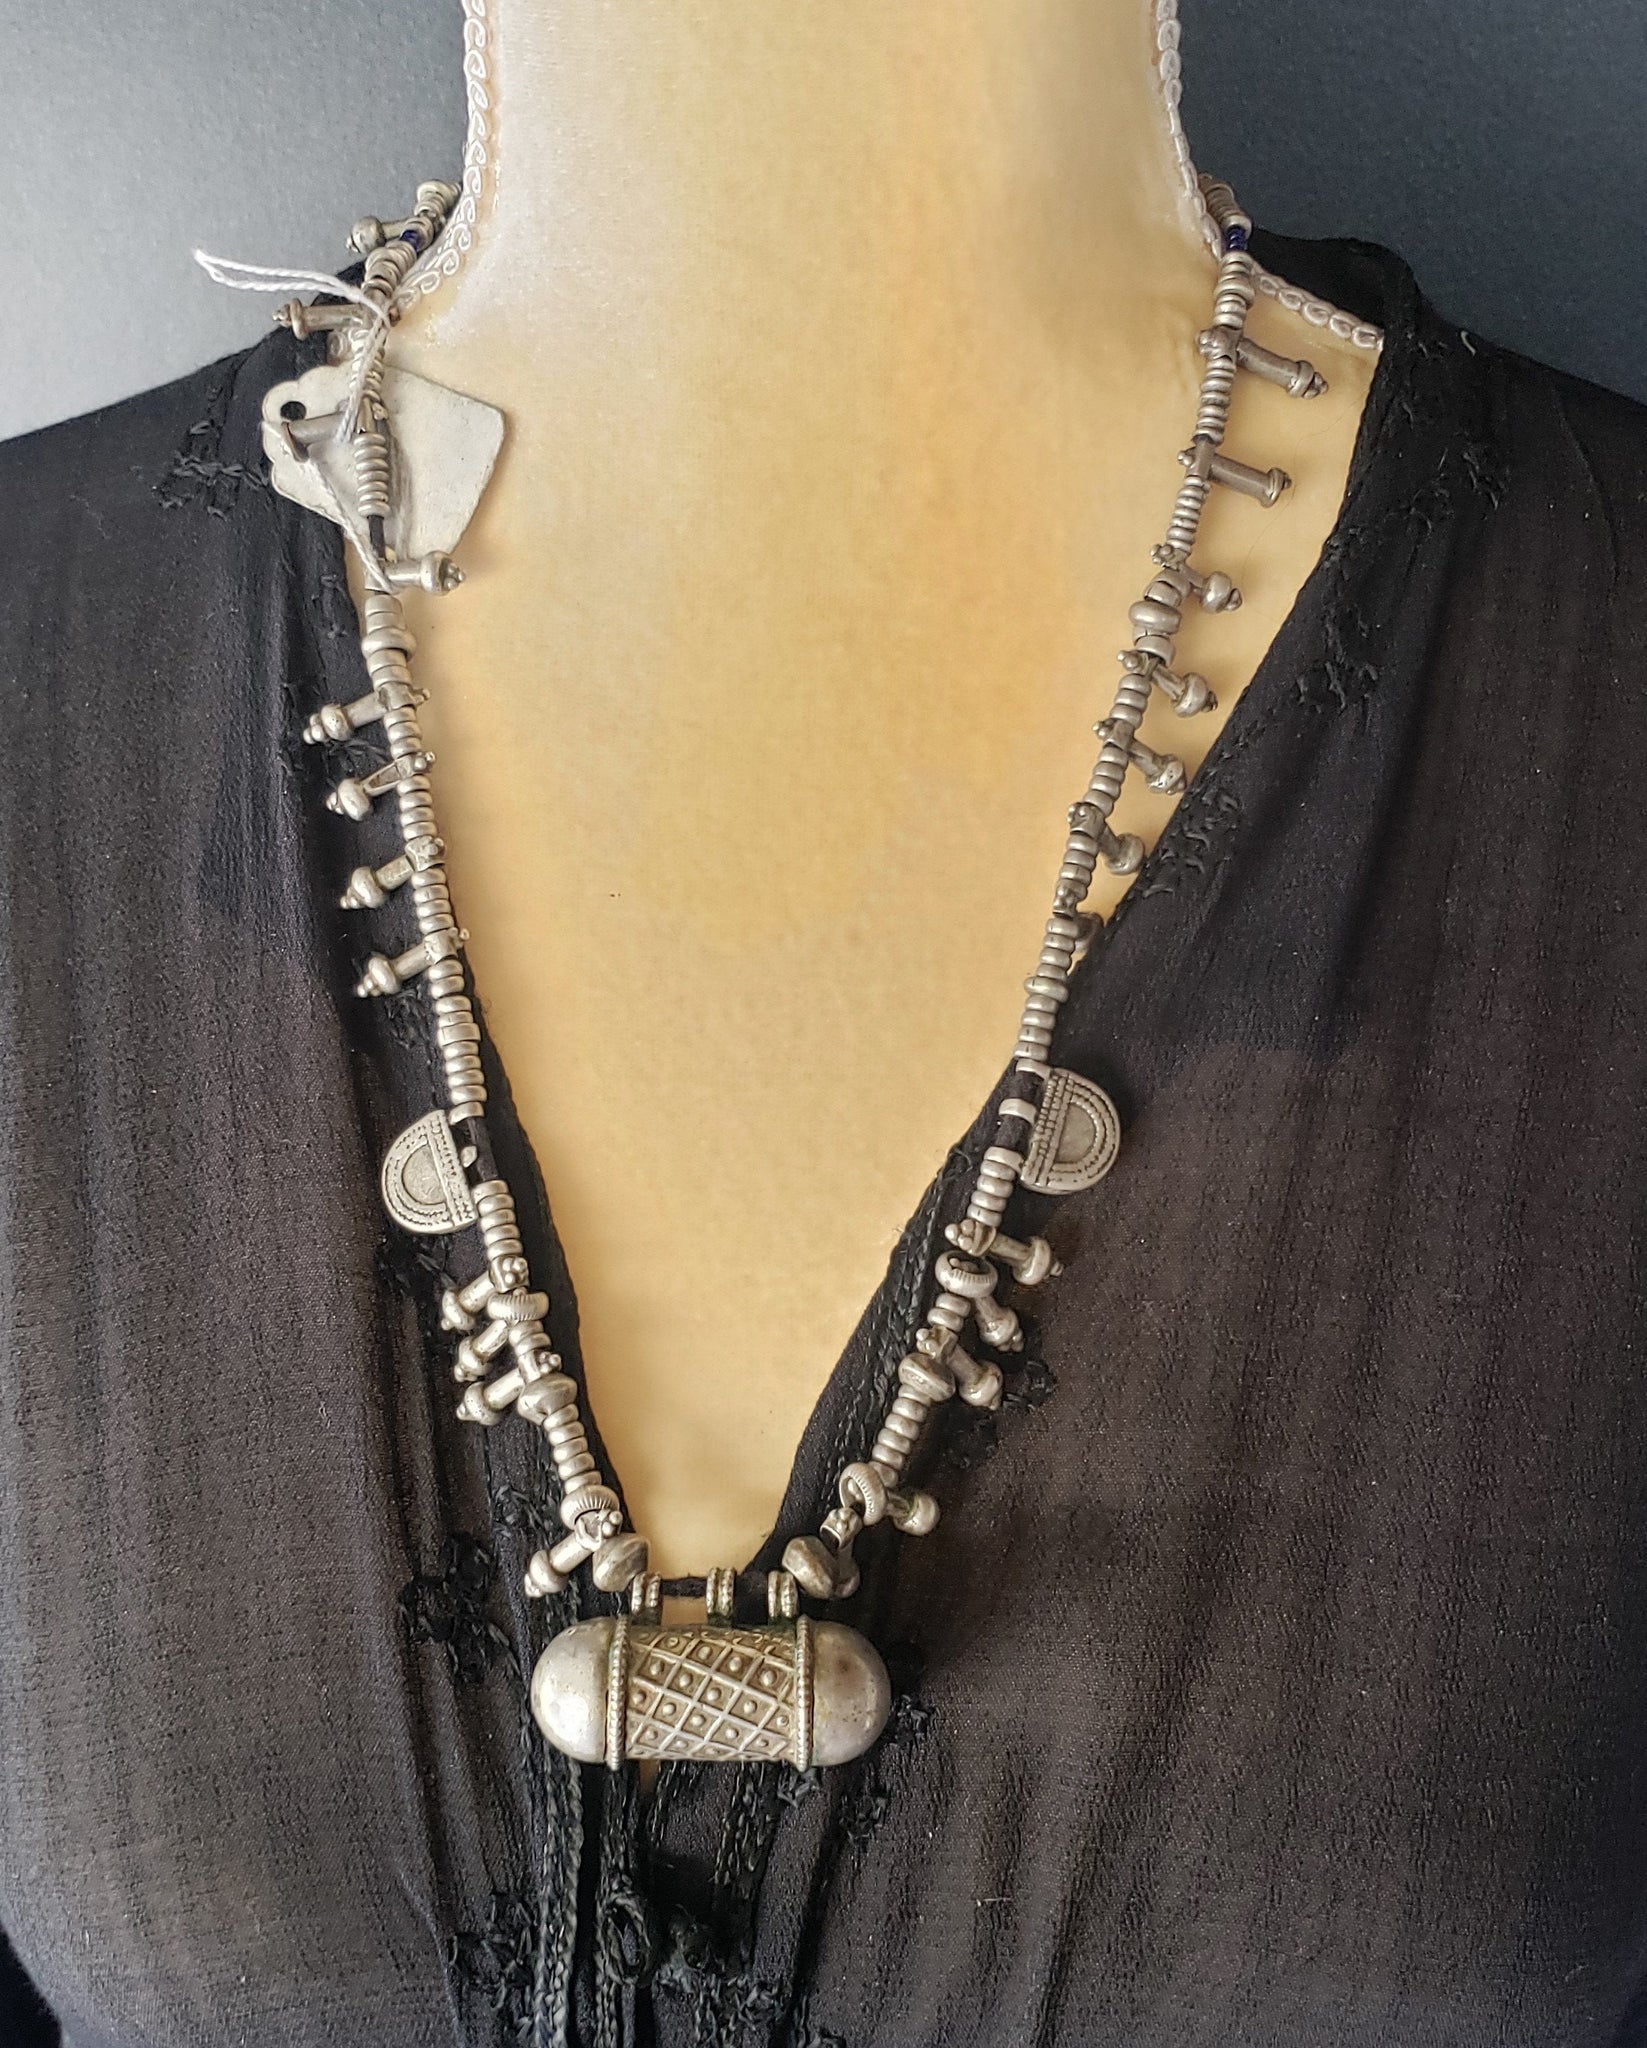 TURQUOISE MANTRA LOCKET - Sterling Silver - Buddhist Prayer Necklace - Ash  Jewellery - Keepsake - Positive affirmation - Vintage Locket